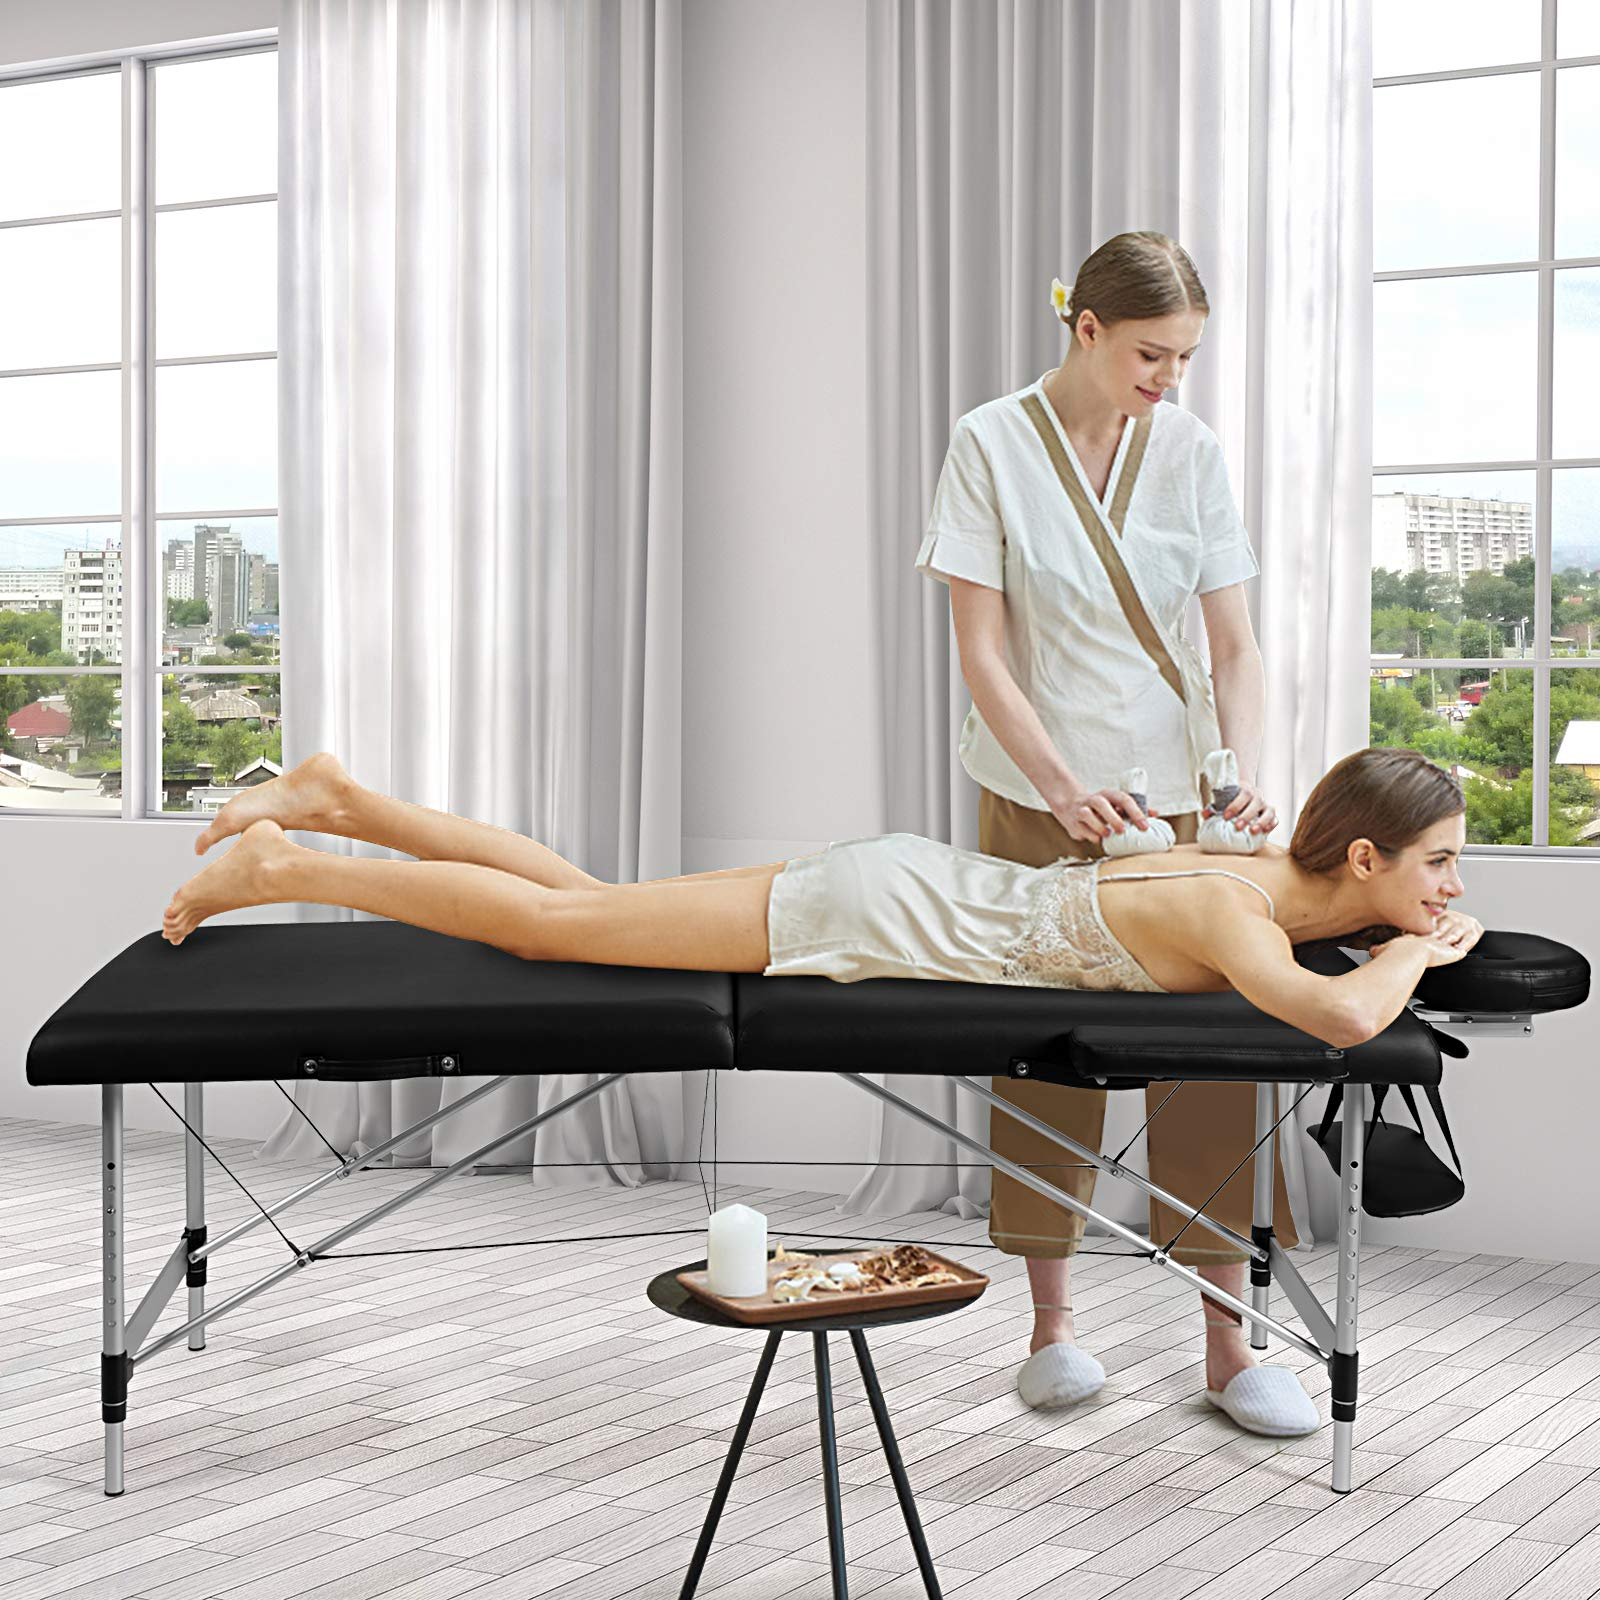 Giantex Portable Massage Table 84inch, Folding Lash Bed Aluminium Frame